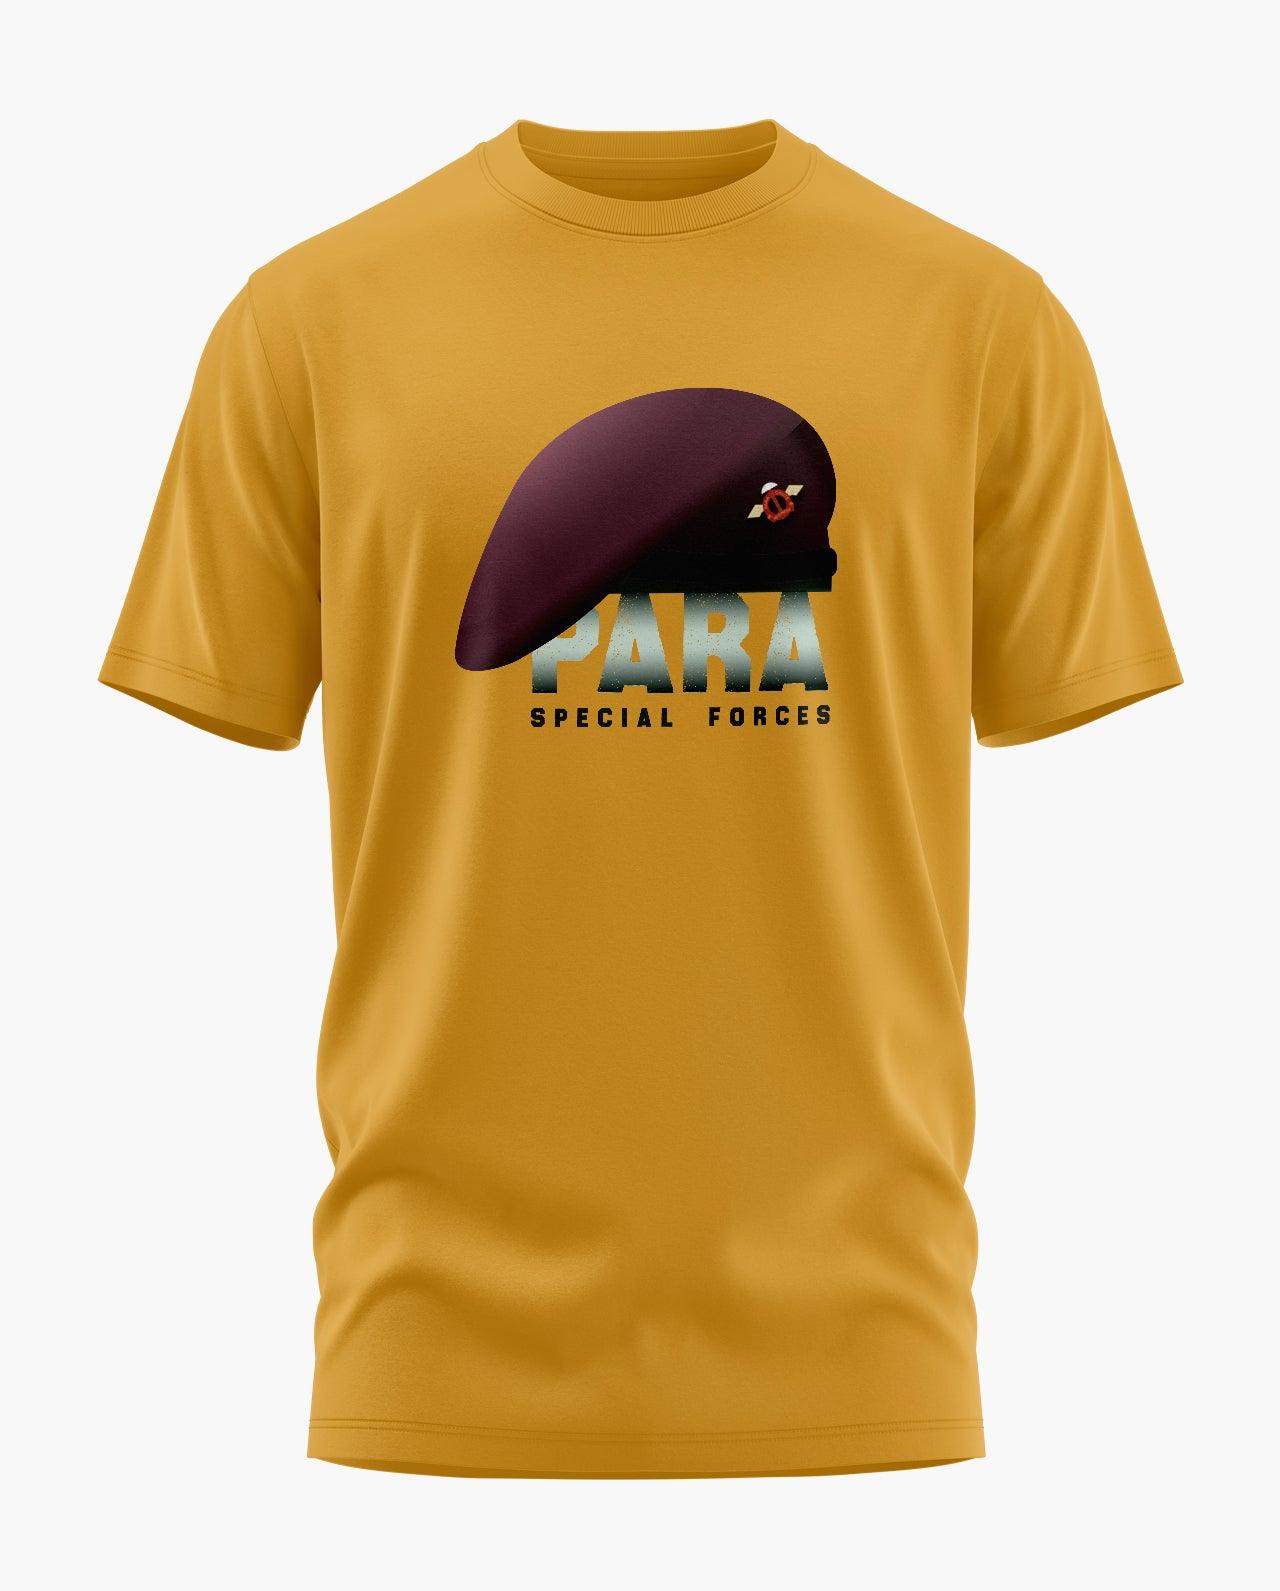 Parachute Regiment T-Shirt - Aero Armour